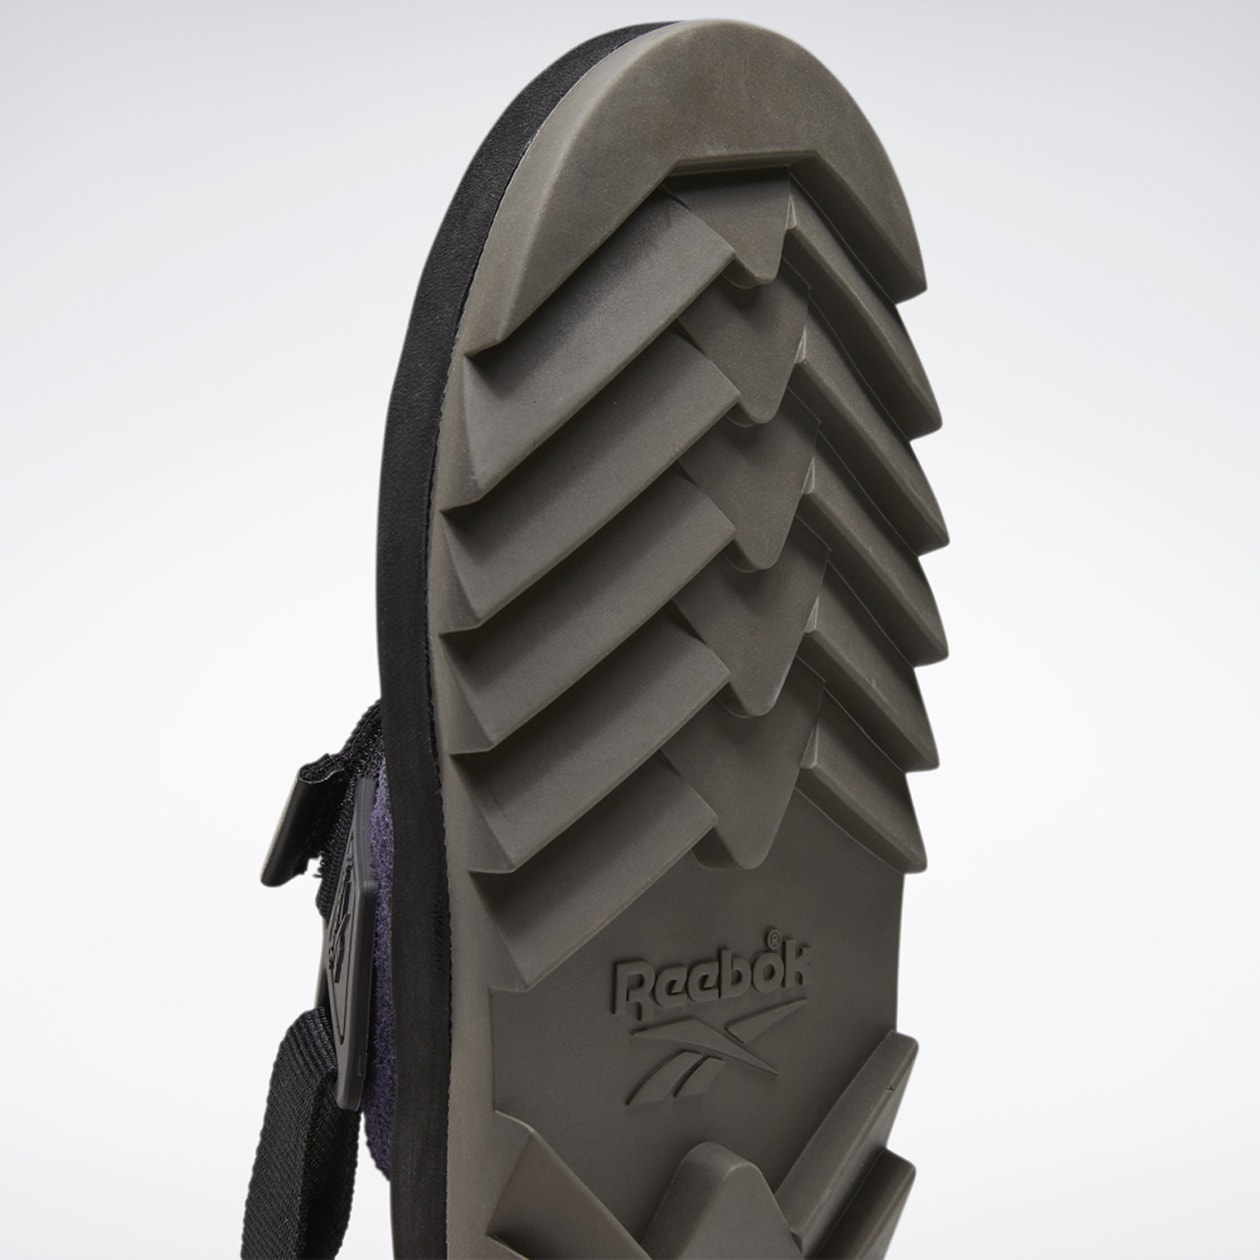 Reebok Beatnik Shoe History, Influence, Redesign nicole mclaughlin leo gamboa sneaker sandal colorway 2020